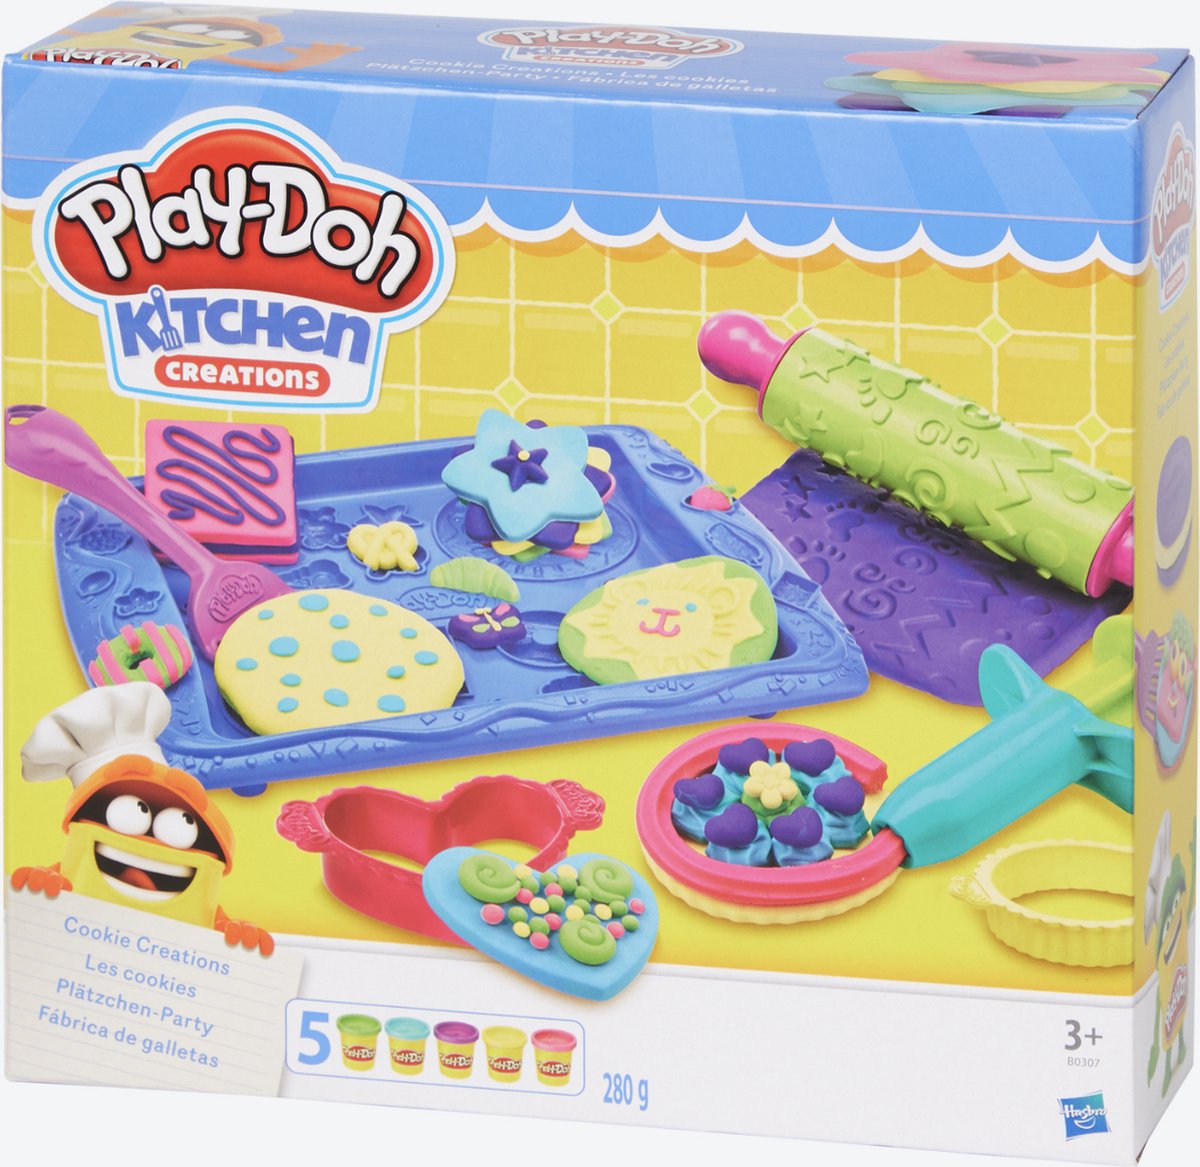 Play-Doh kleiset Cookie Creations-clay set Cookie Creations-gifts-cadeustje-3 years + - Play-Doh